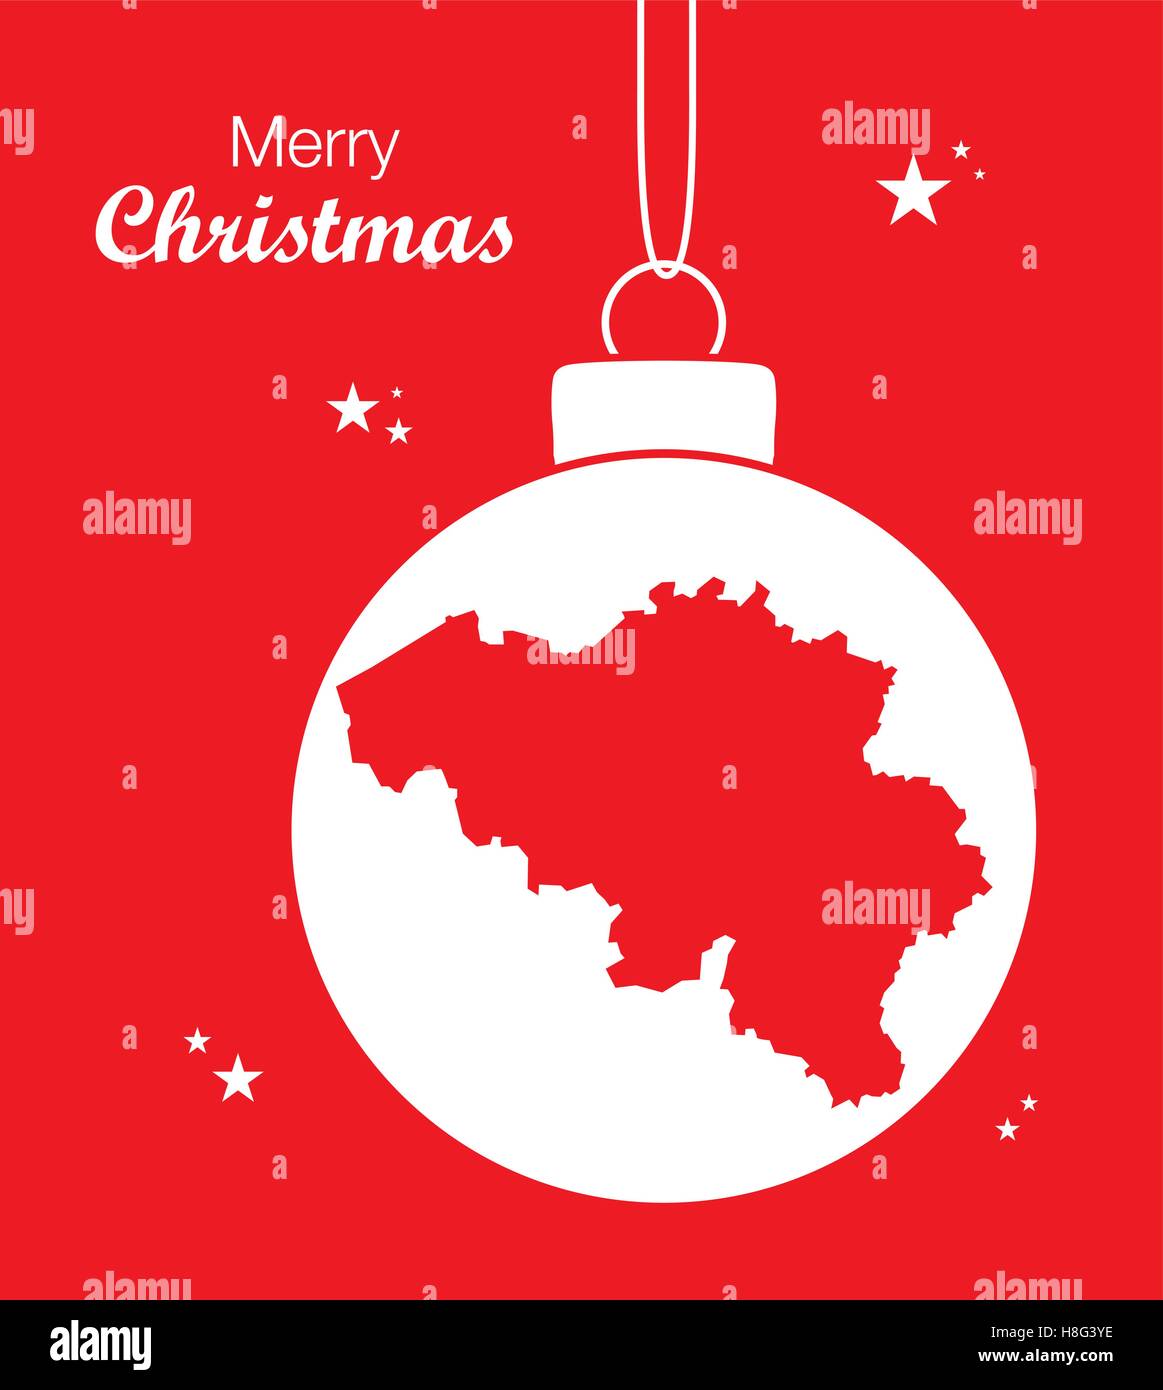 Merry Christmas Map Belgium Stock Vector